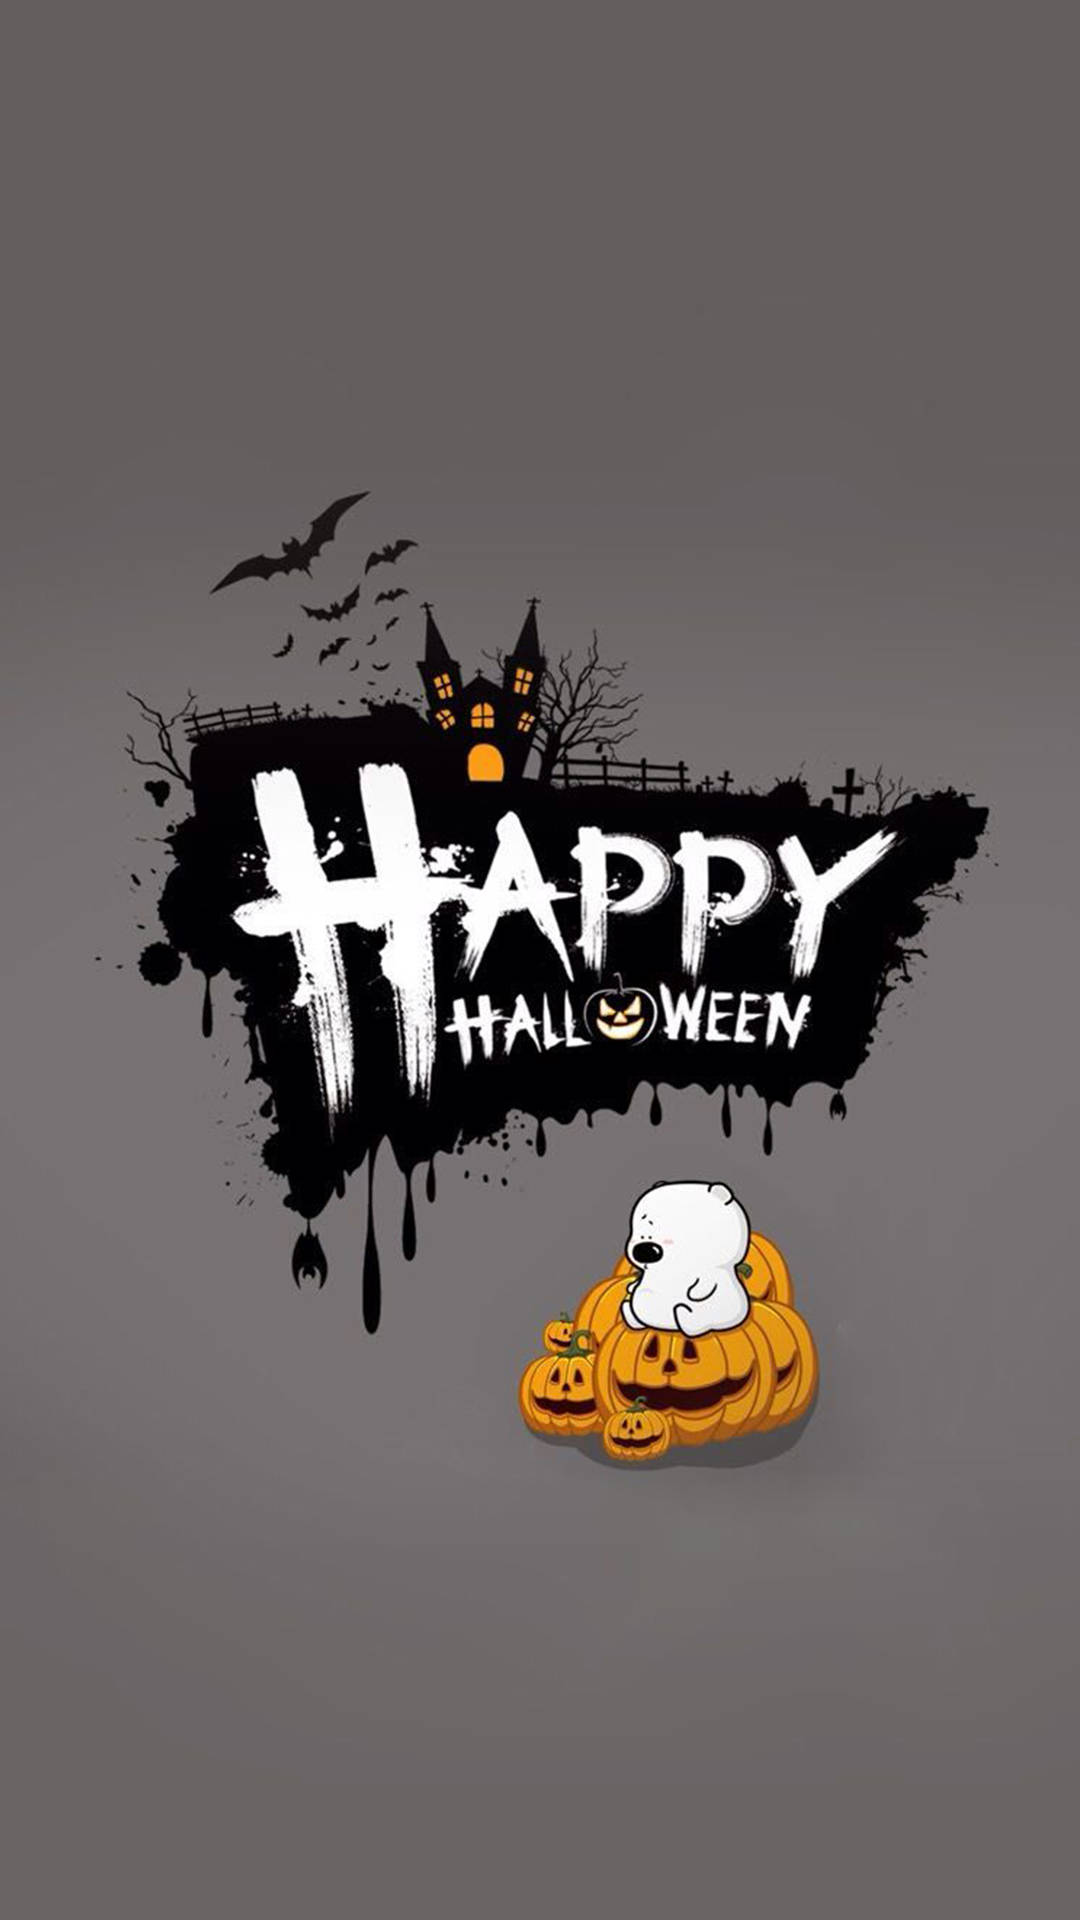 Download Scary Happy Halloween iPhone Wallpaper